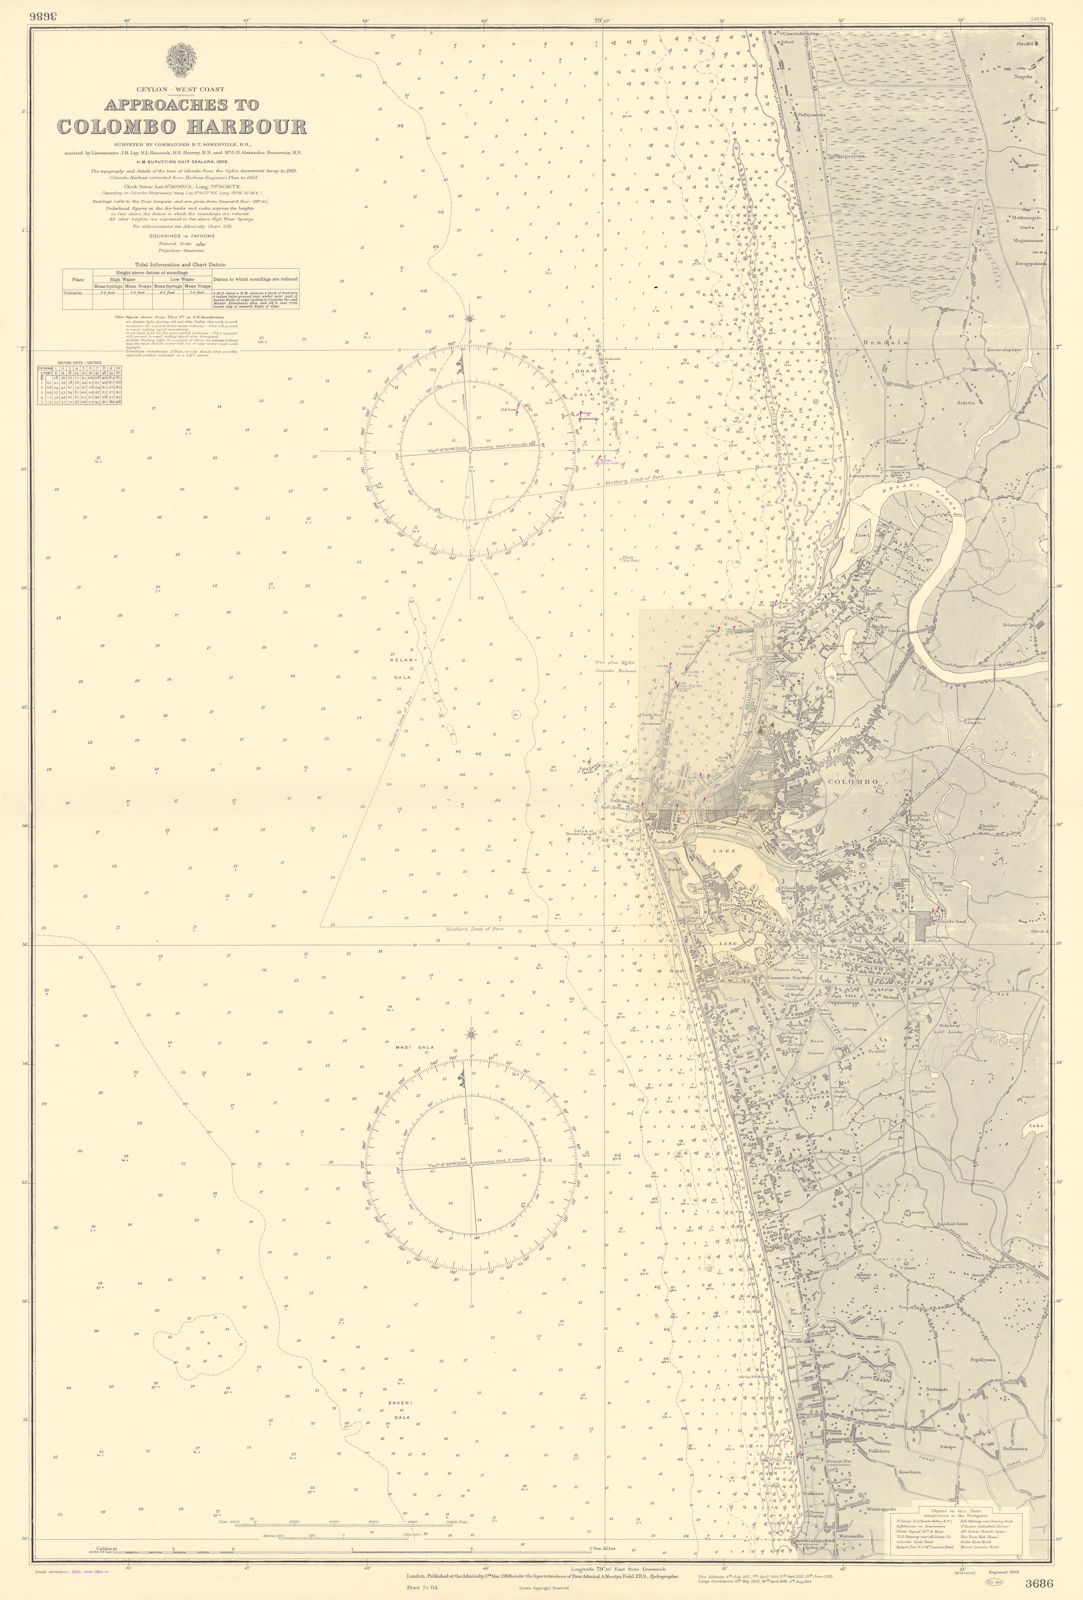 Colombo Harbour approaches Ceylon Sri Lanka. ADMIRALTY sea chart 1908 (1956) map